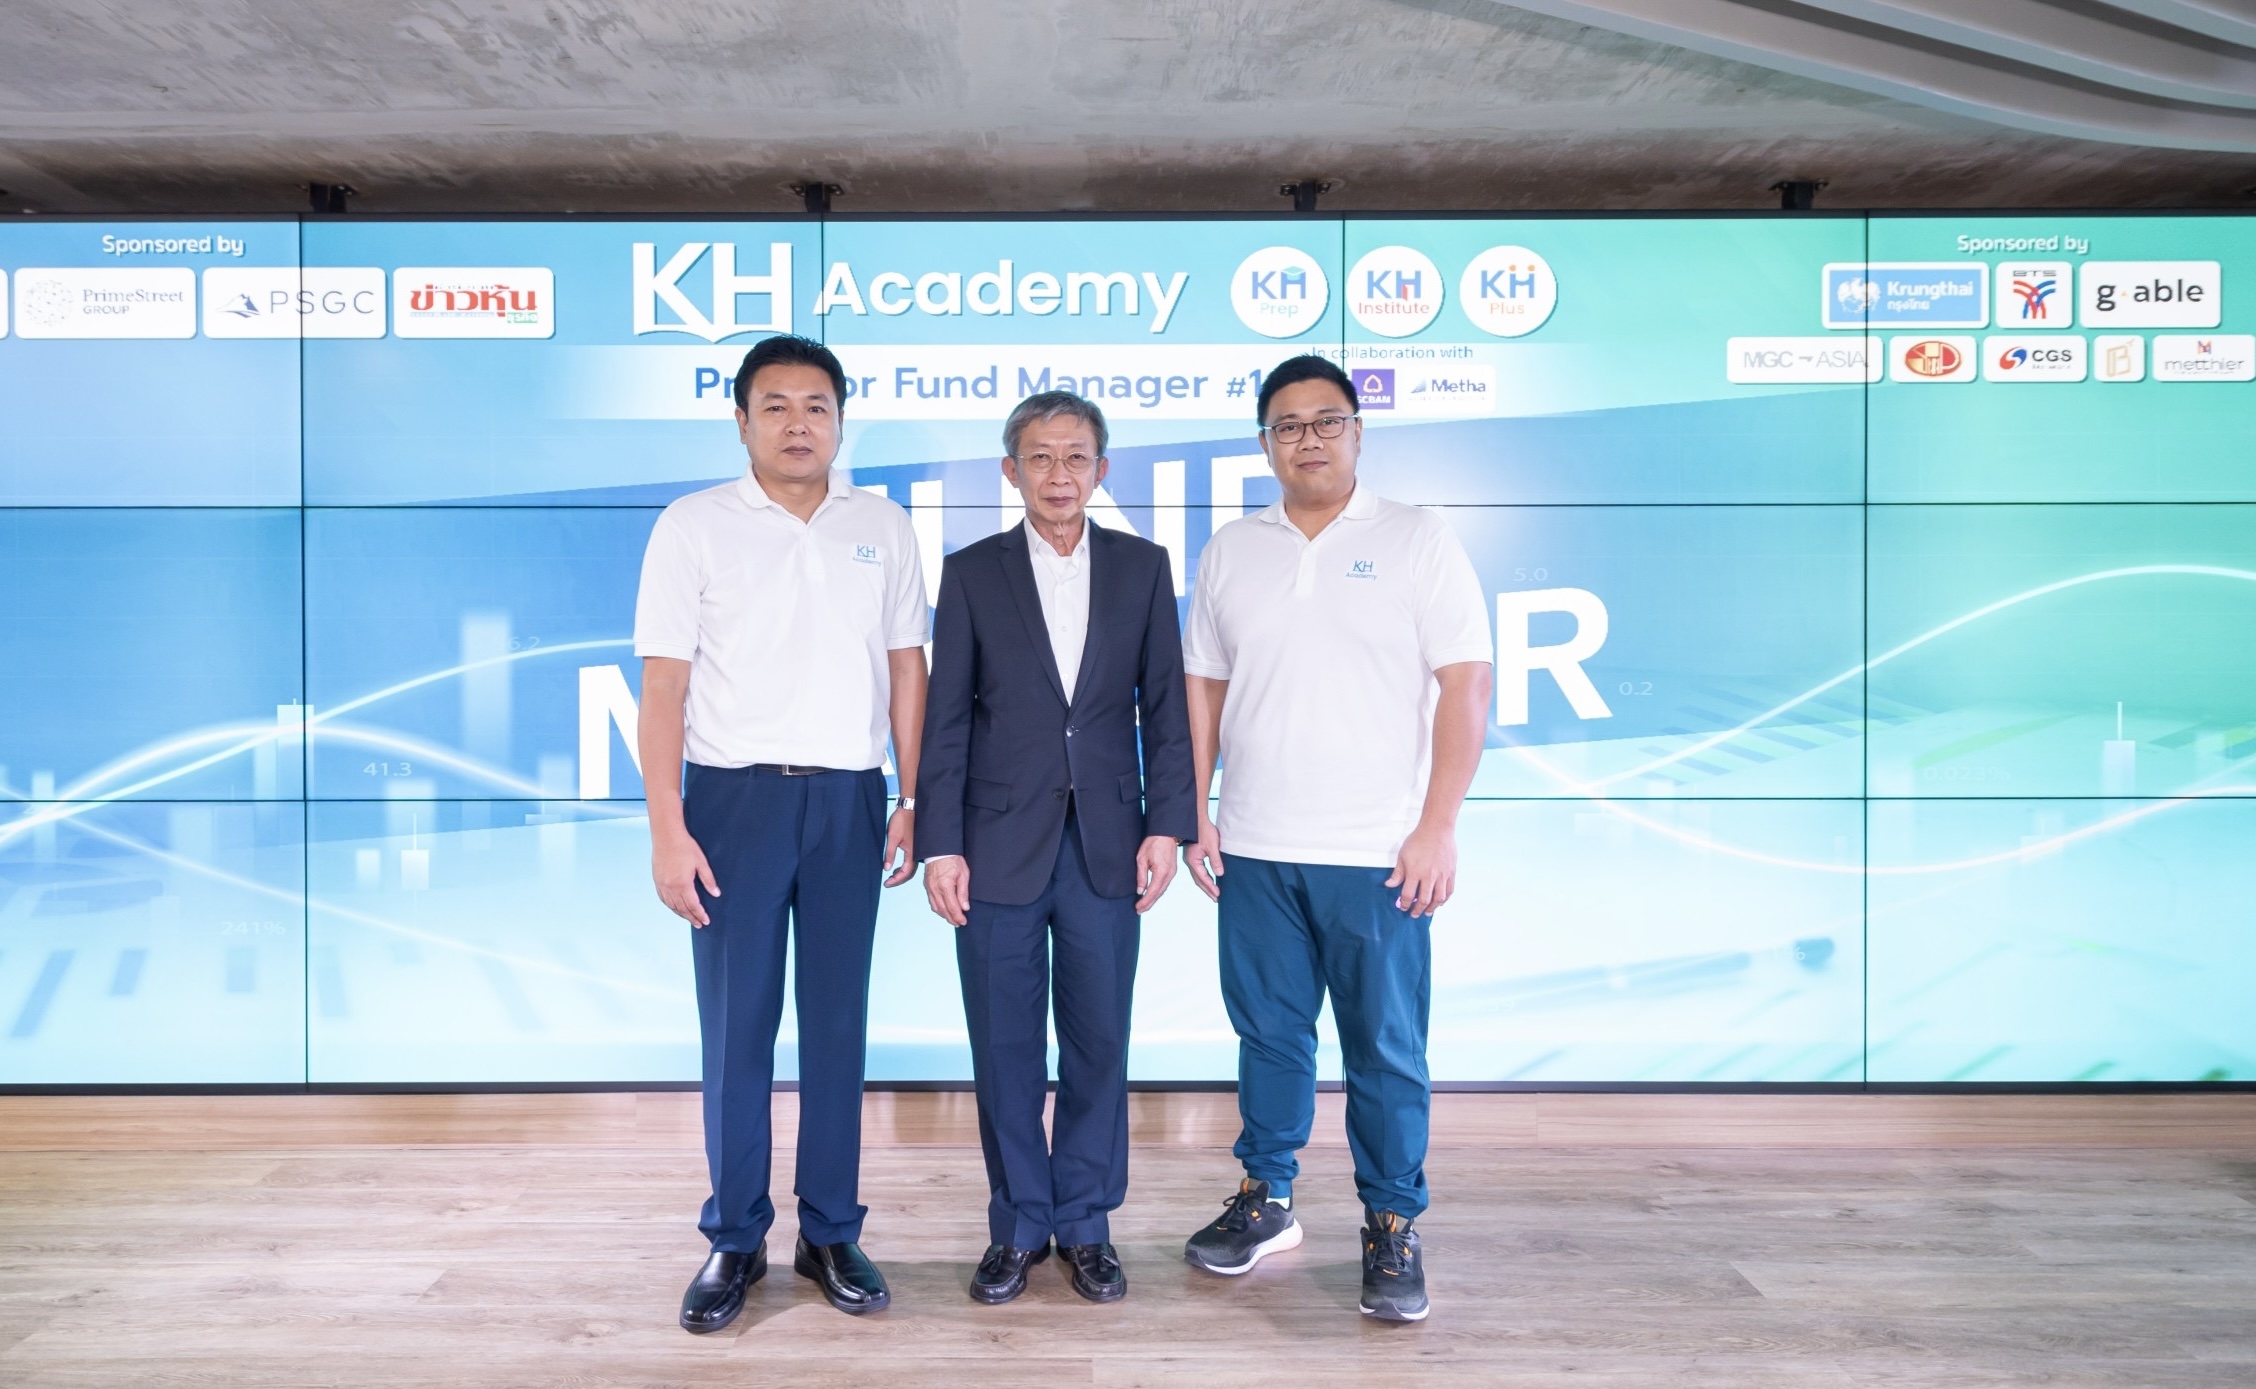 KH Academy ผนึก 3 บลจ. “กรุงไทย-ไทยพาณิชย์-เมธา”เปิดหลักสูตรการเรียนรู้ Prep for Fund Manager รุ่นที่ 1บ่มเพาะเยาวชนสู่อาชีพผู้จัดการกองทุน